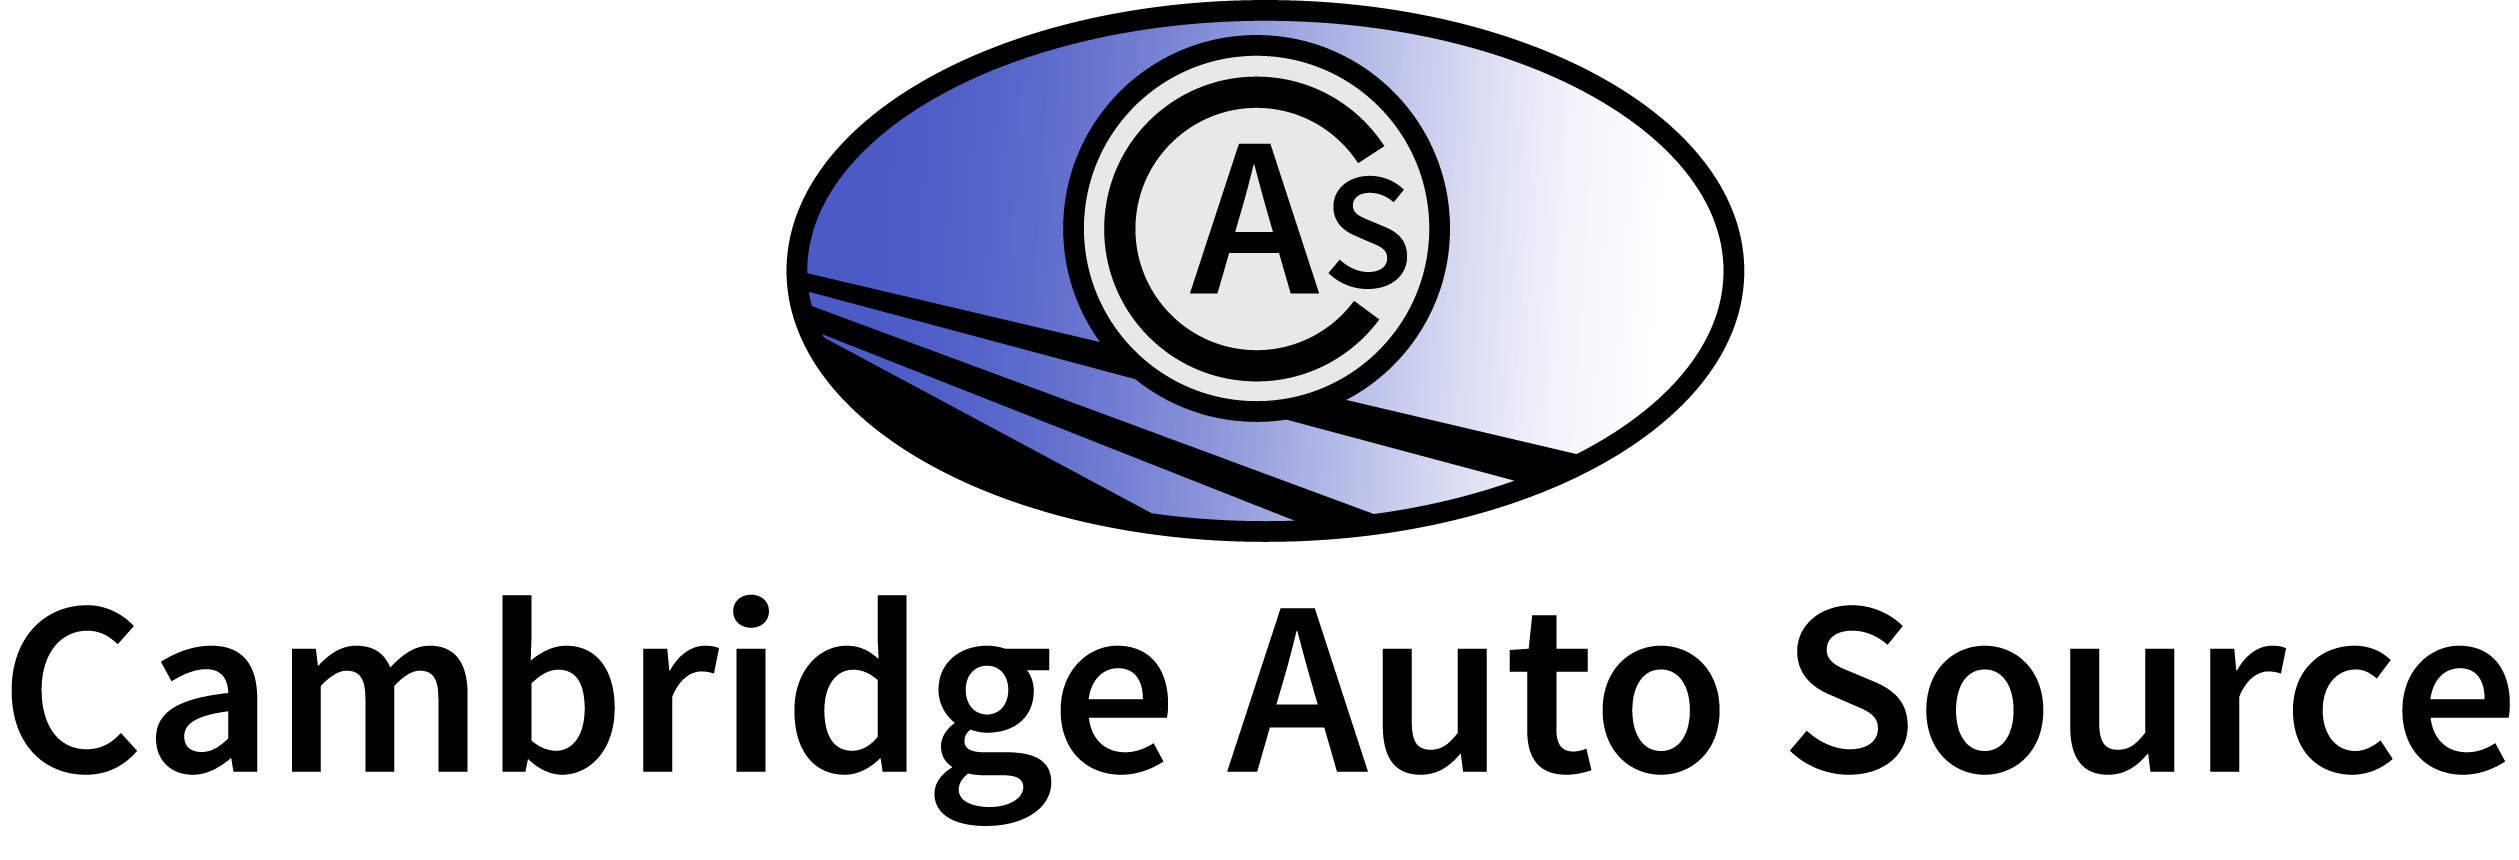 Cambridge Auto Source logo